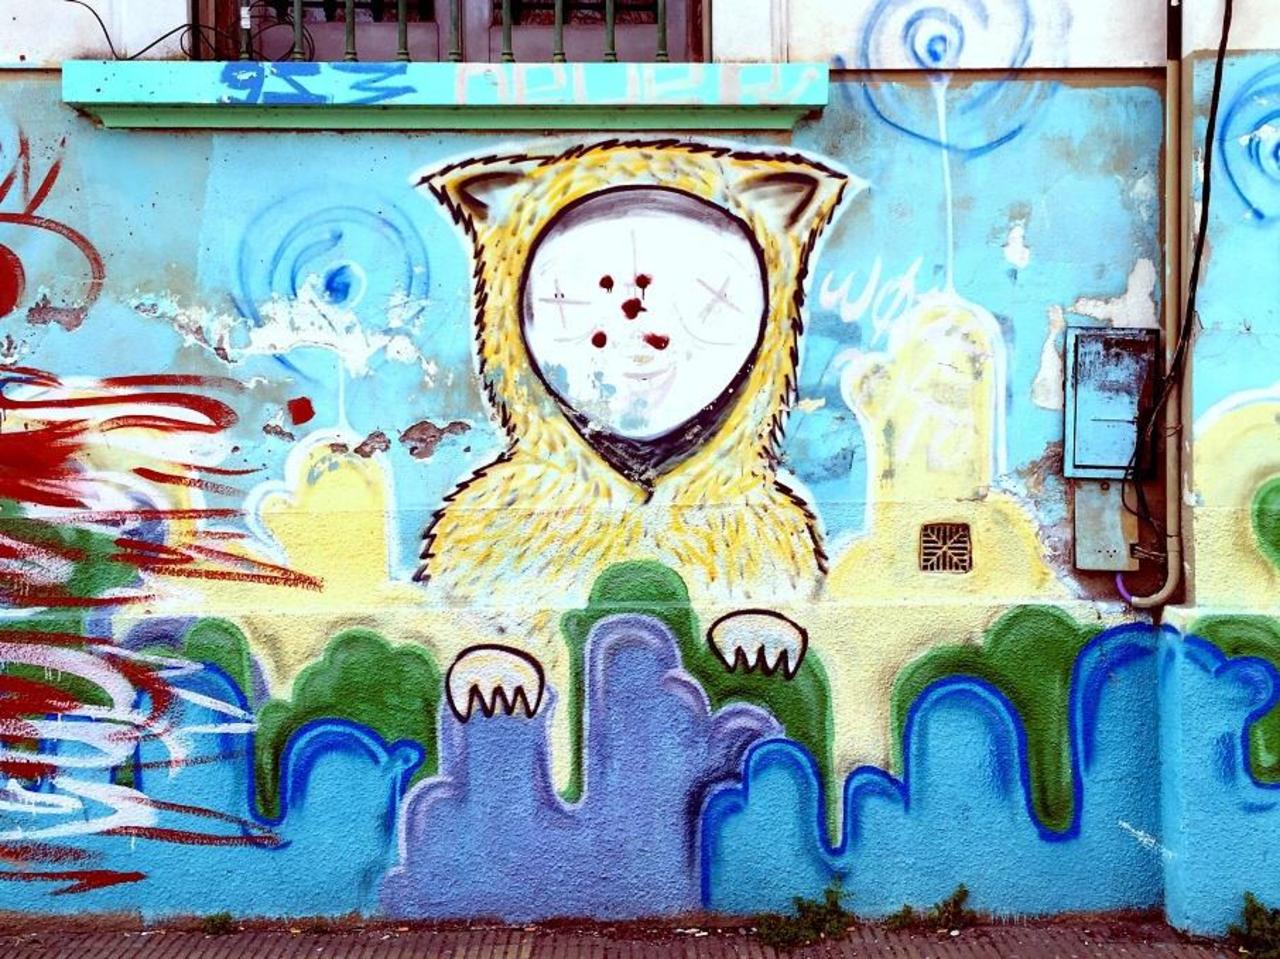 #Graffiti de hoy: << The bear’s dress  >> calle 66 8y9 #LaPlata #Argentina #StreetArt #UrbanArt #ArteUrbano http://t.co/WTNj9Xjopj